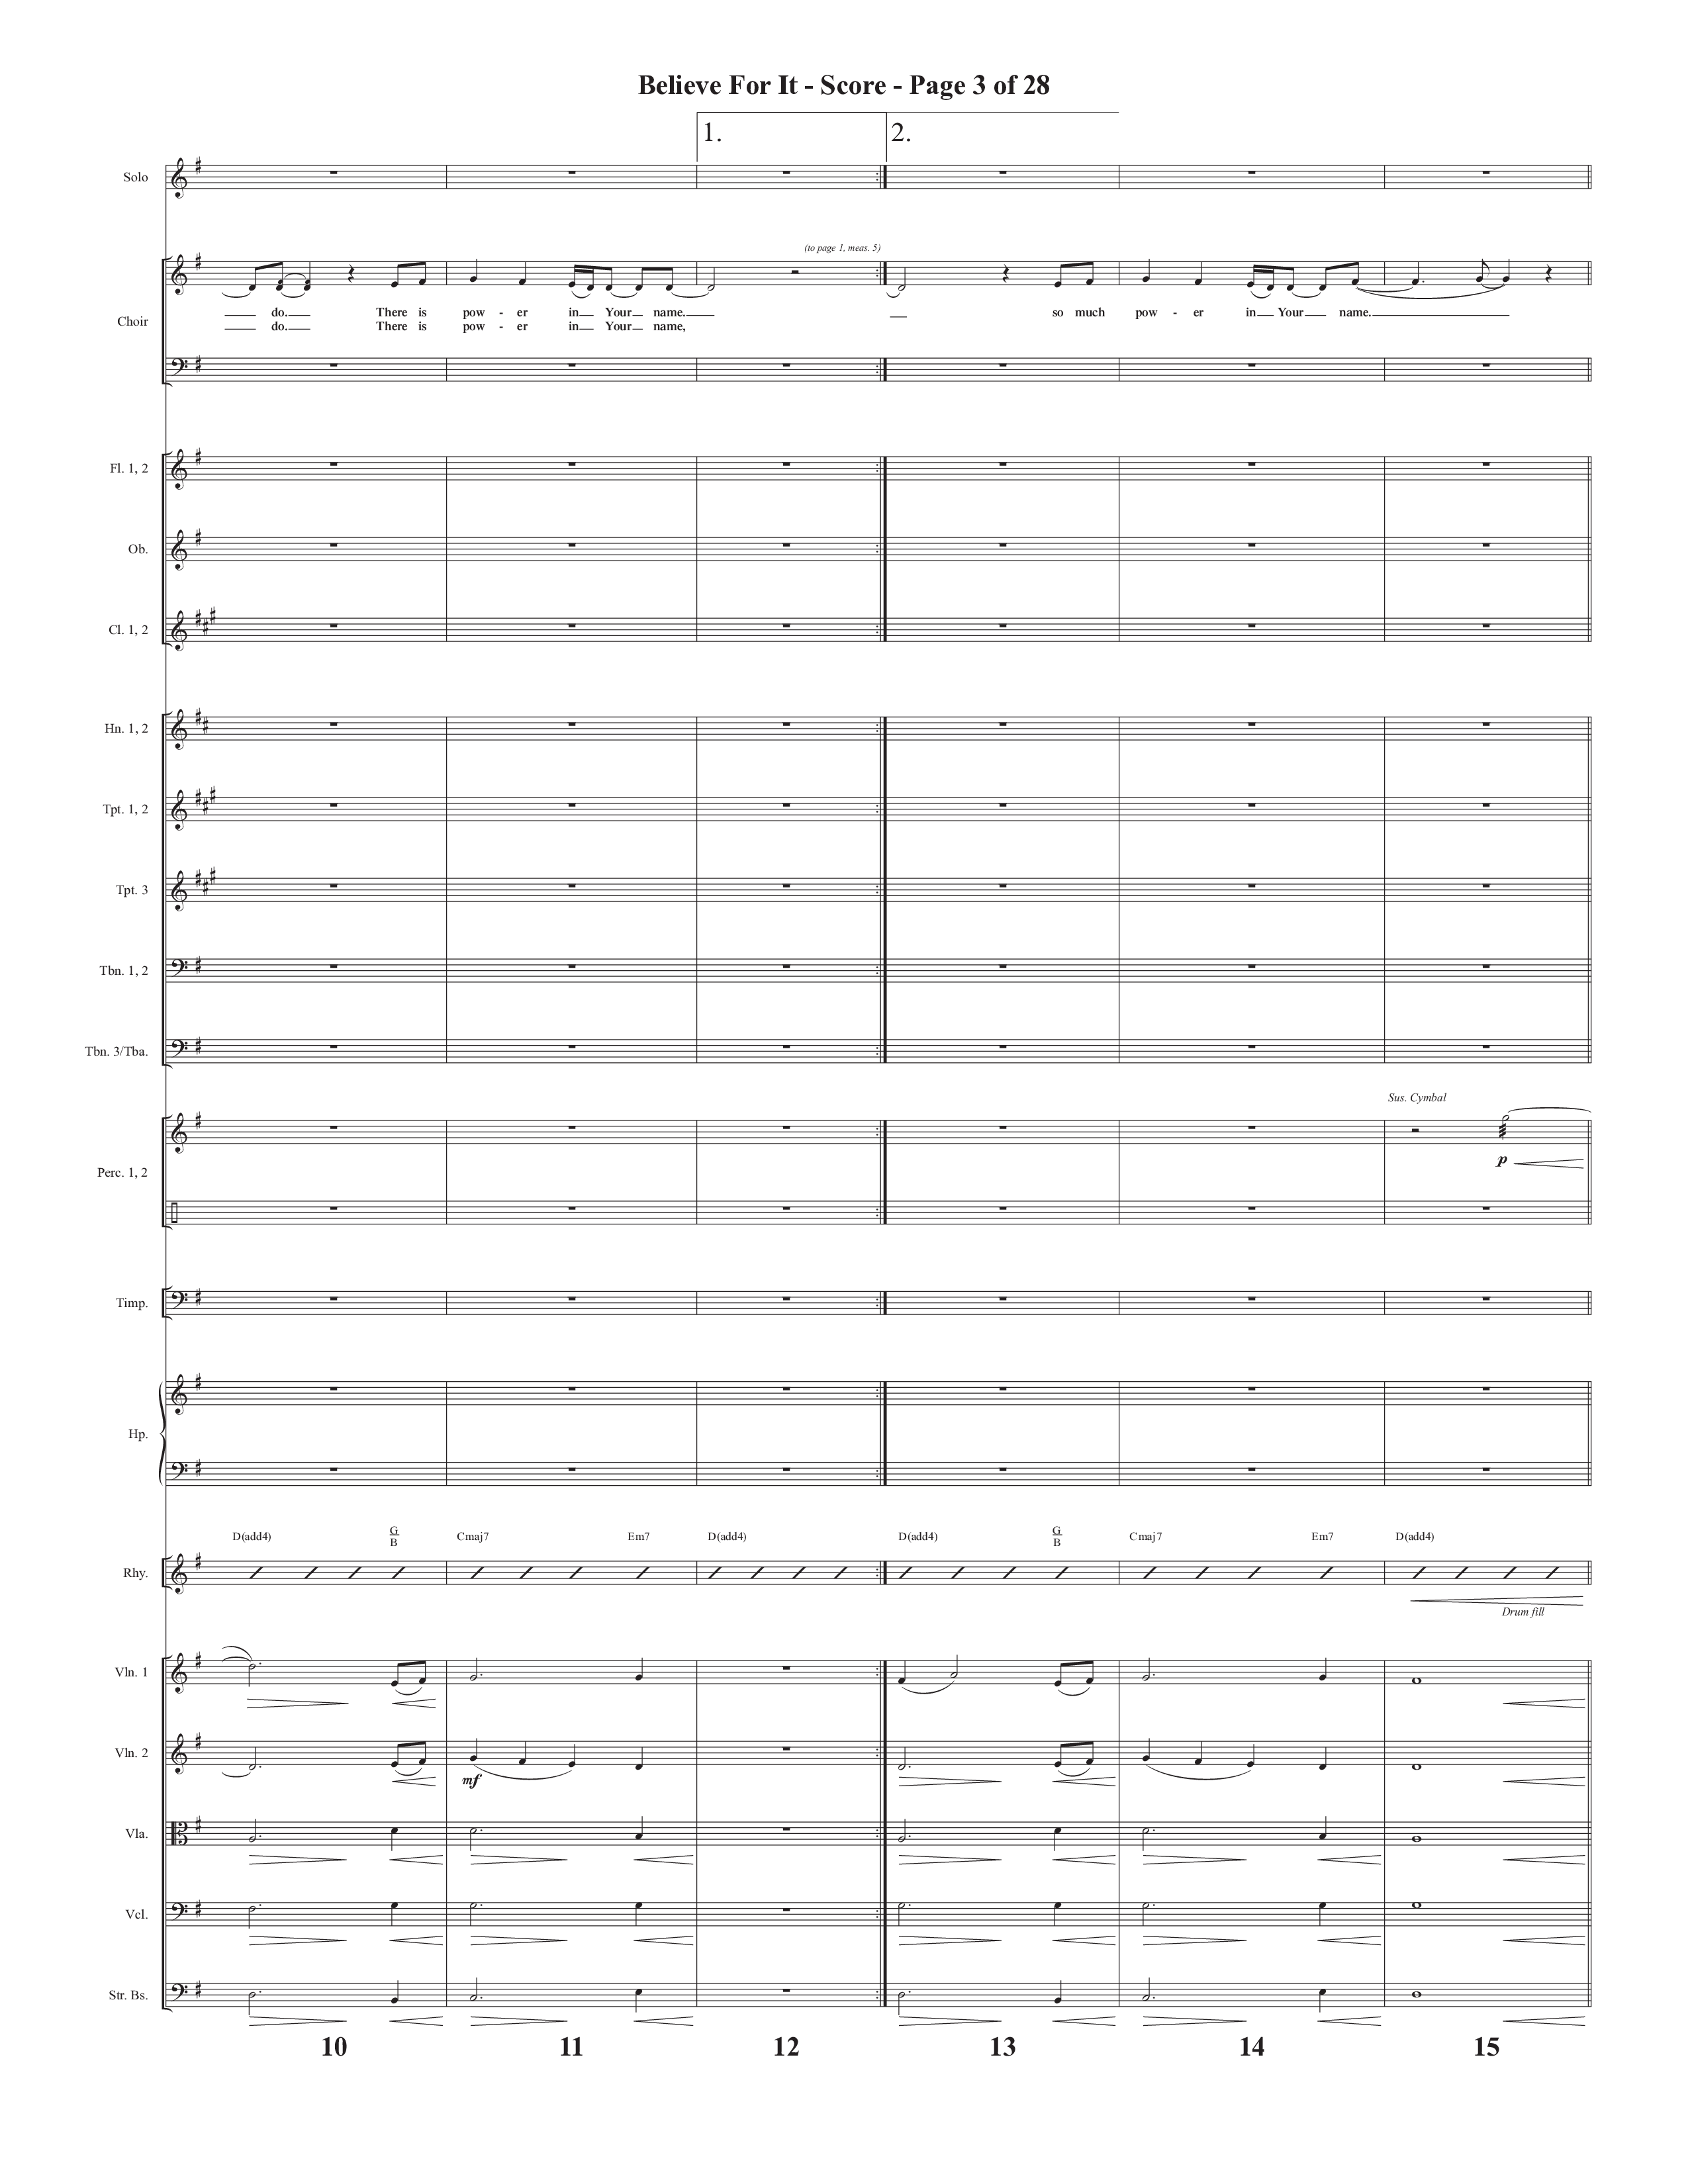 Believe For It (Choral Anthem SATB) Orchestration (Semsen Music / Arr. Phil Nitz)